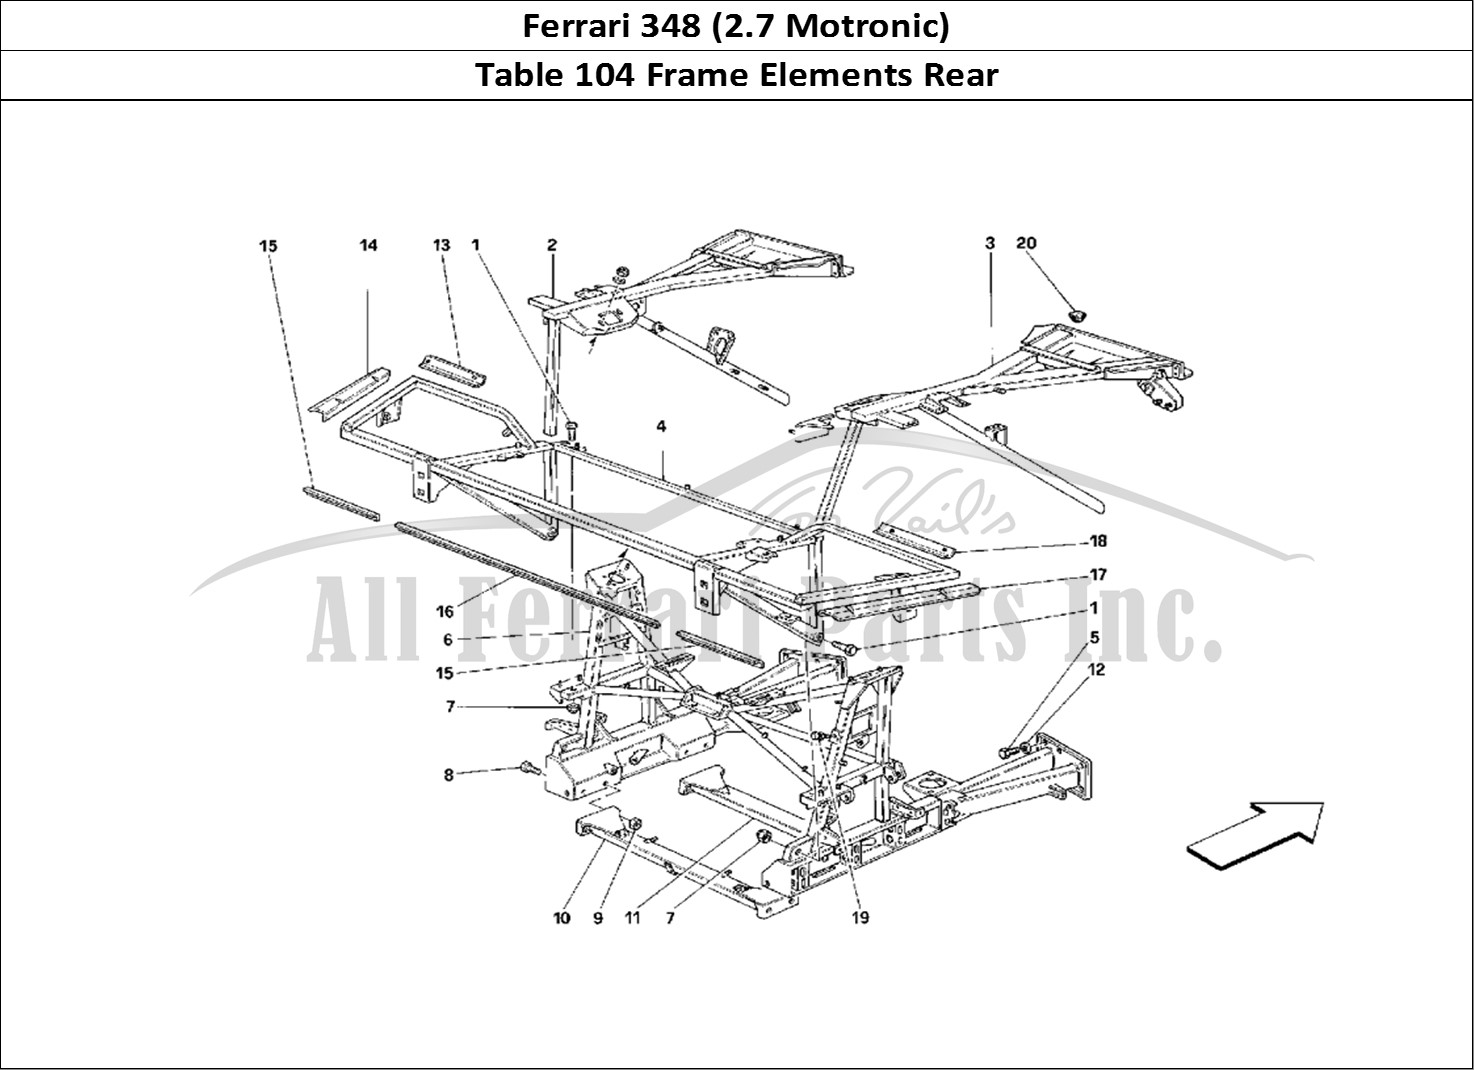 Ferrari Parts Ferrari 348 (2.7 Motronic) Page 104 Frame - Rear Part Element